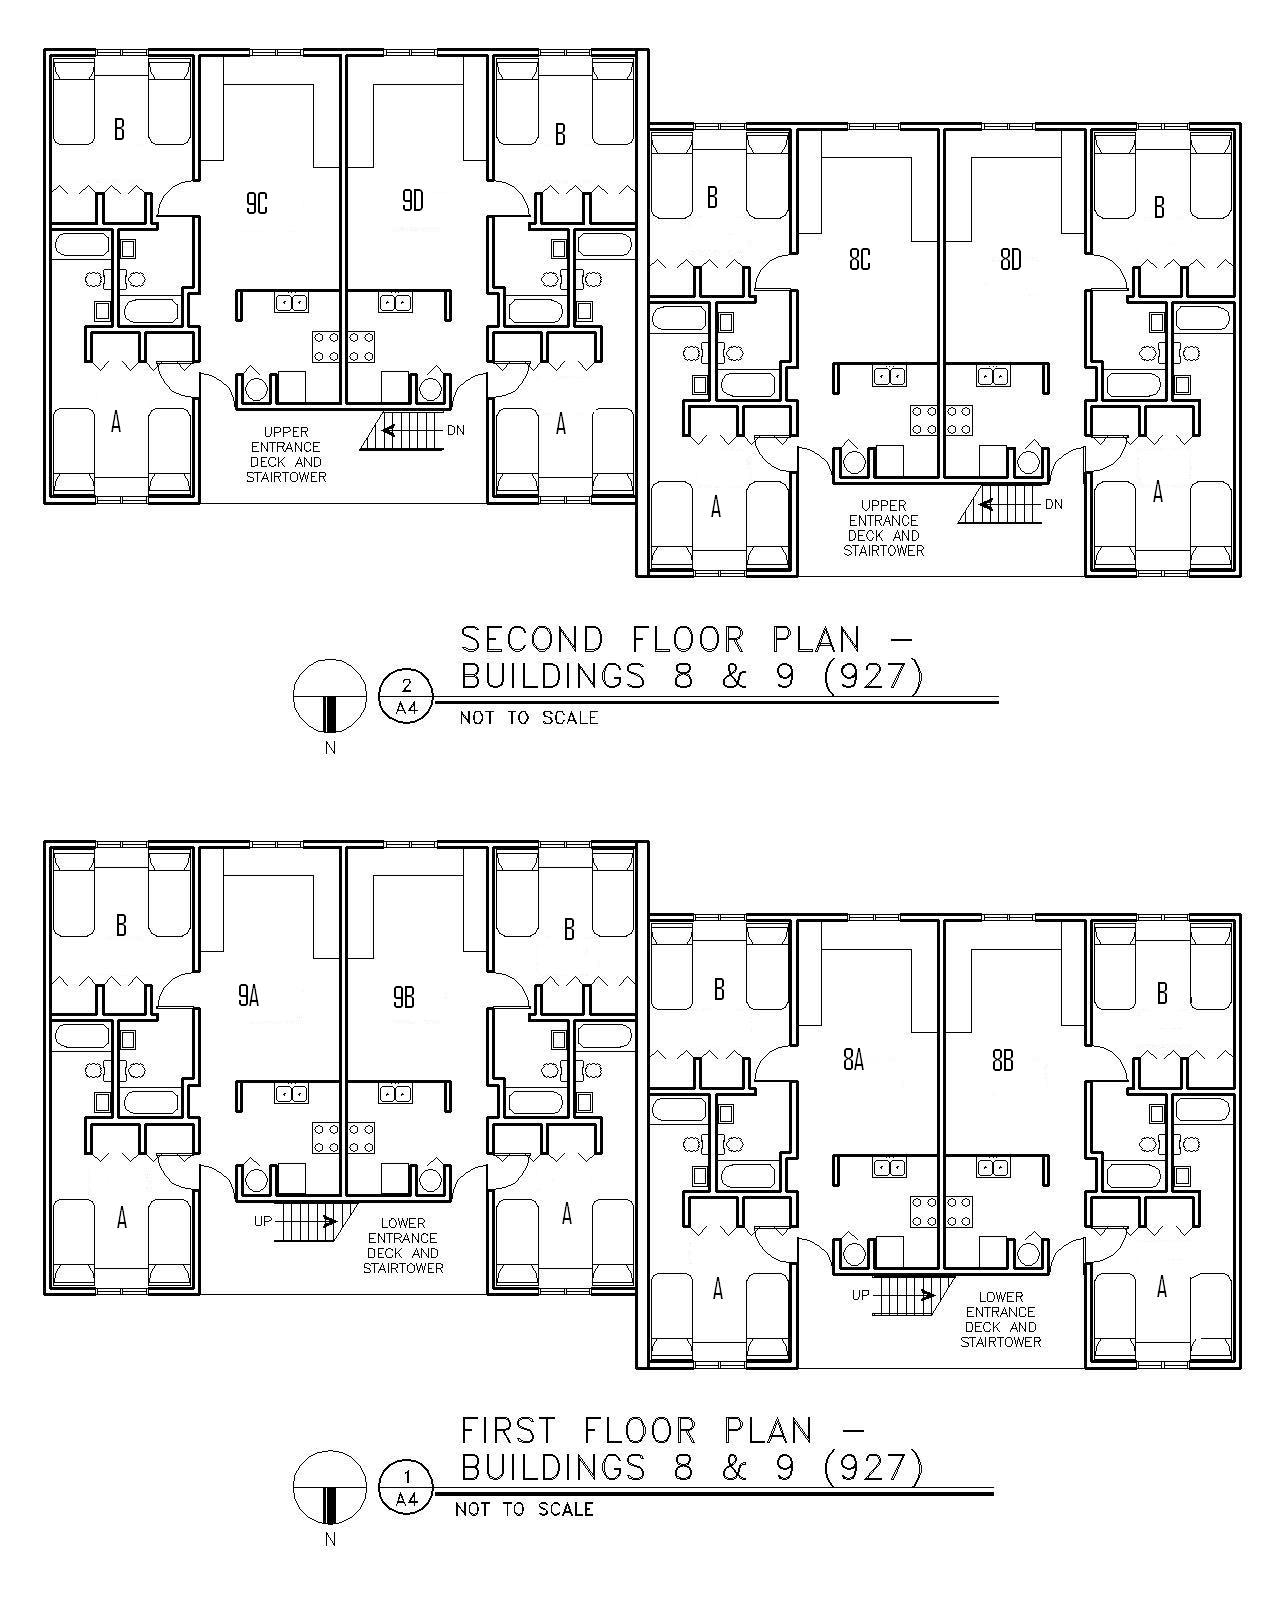 Floor Plan for Buildings 8 & 9